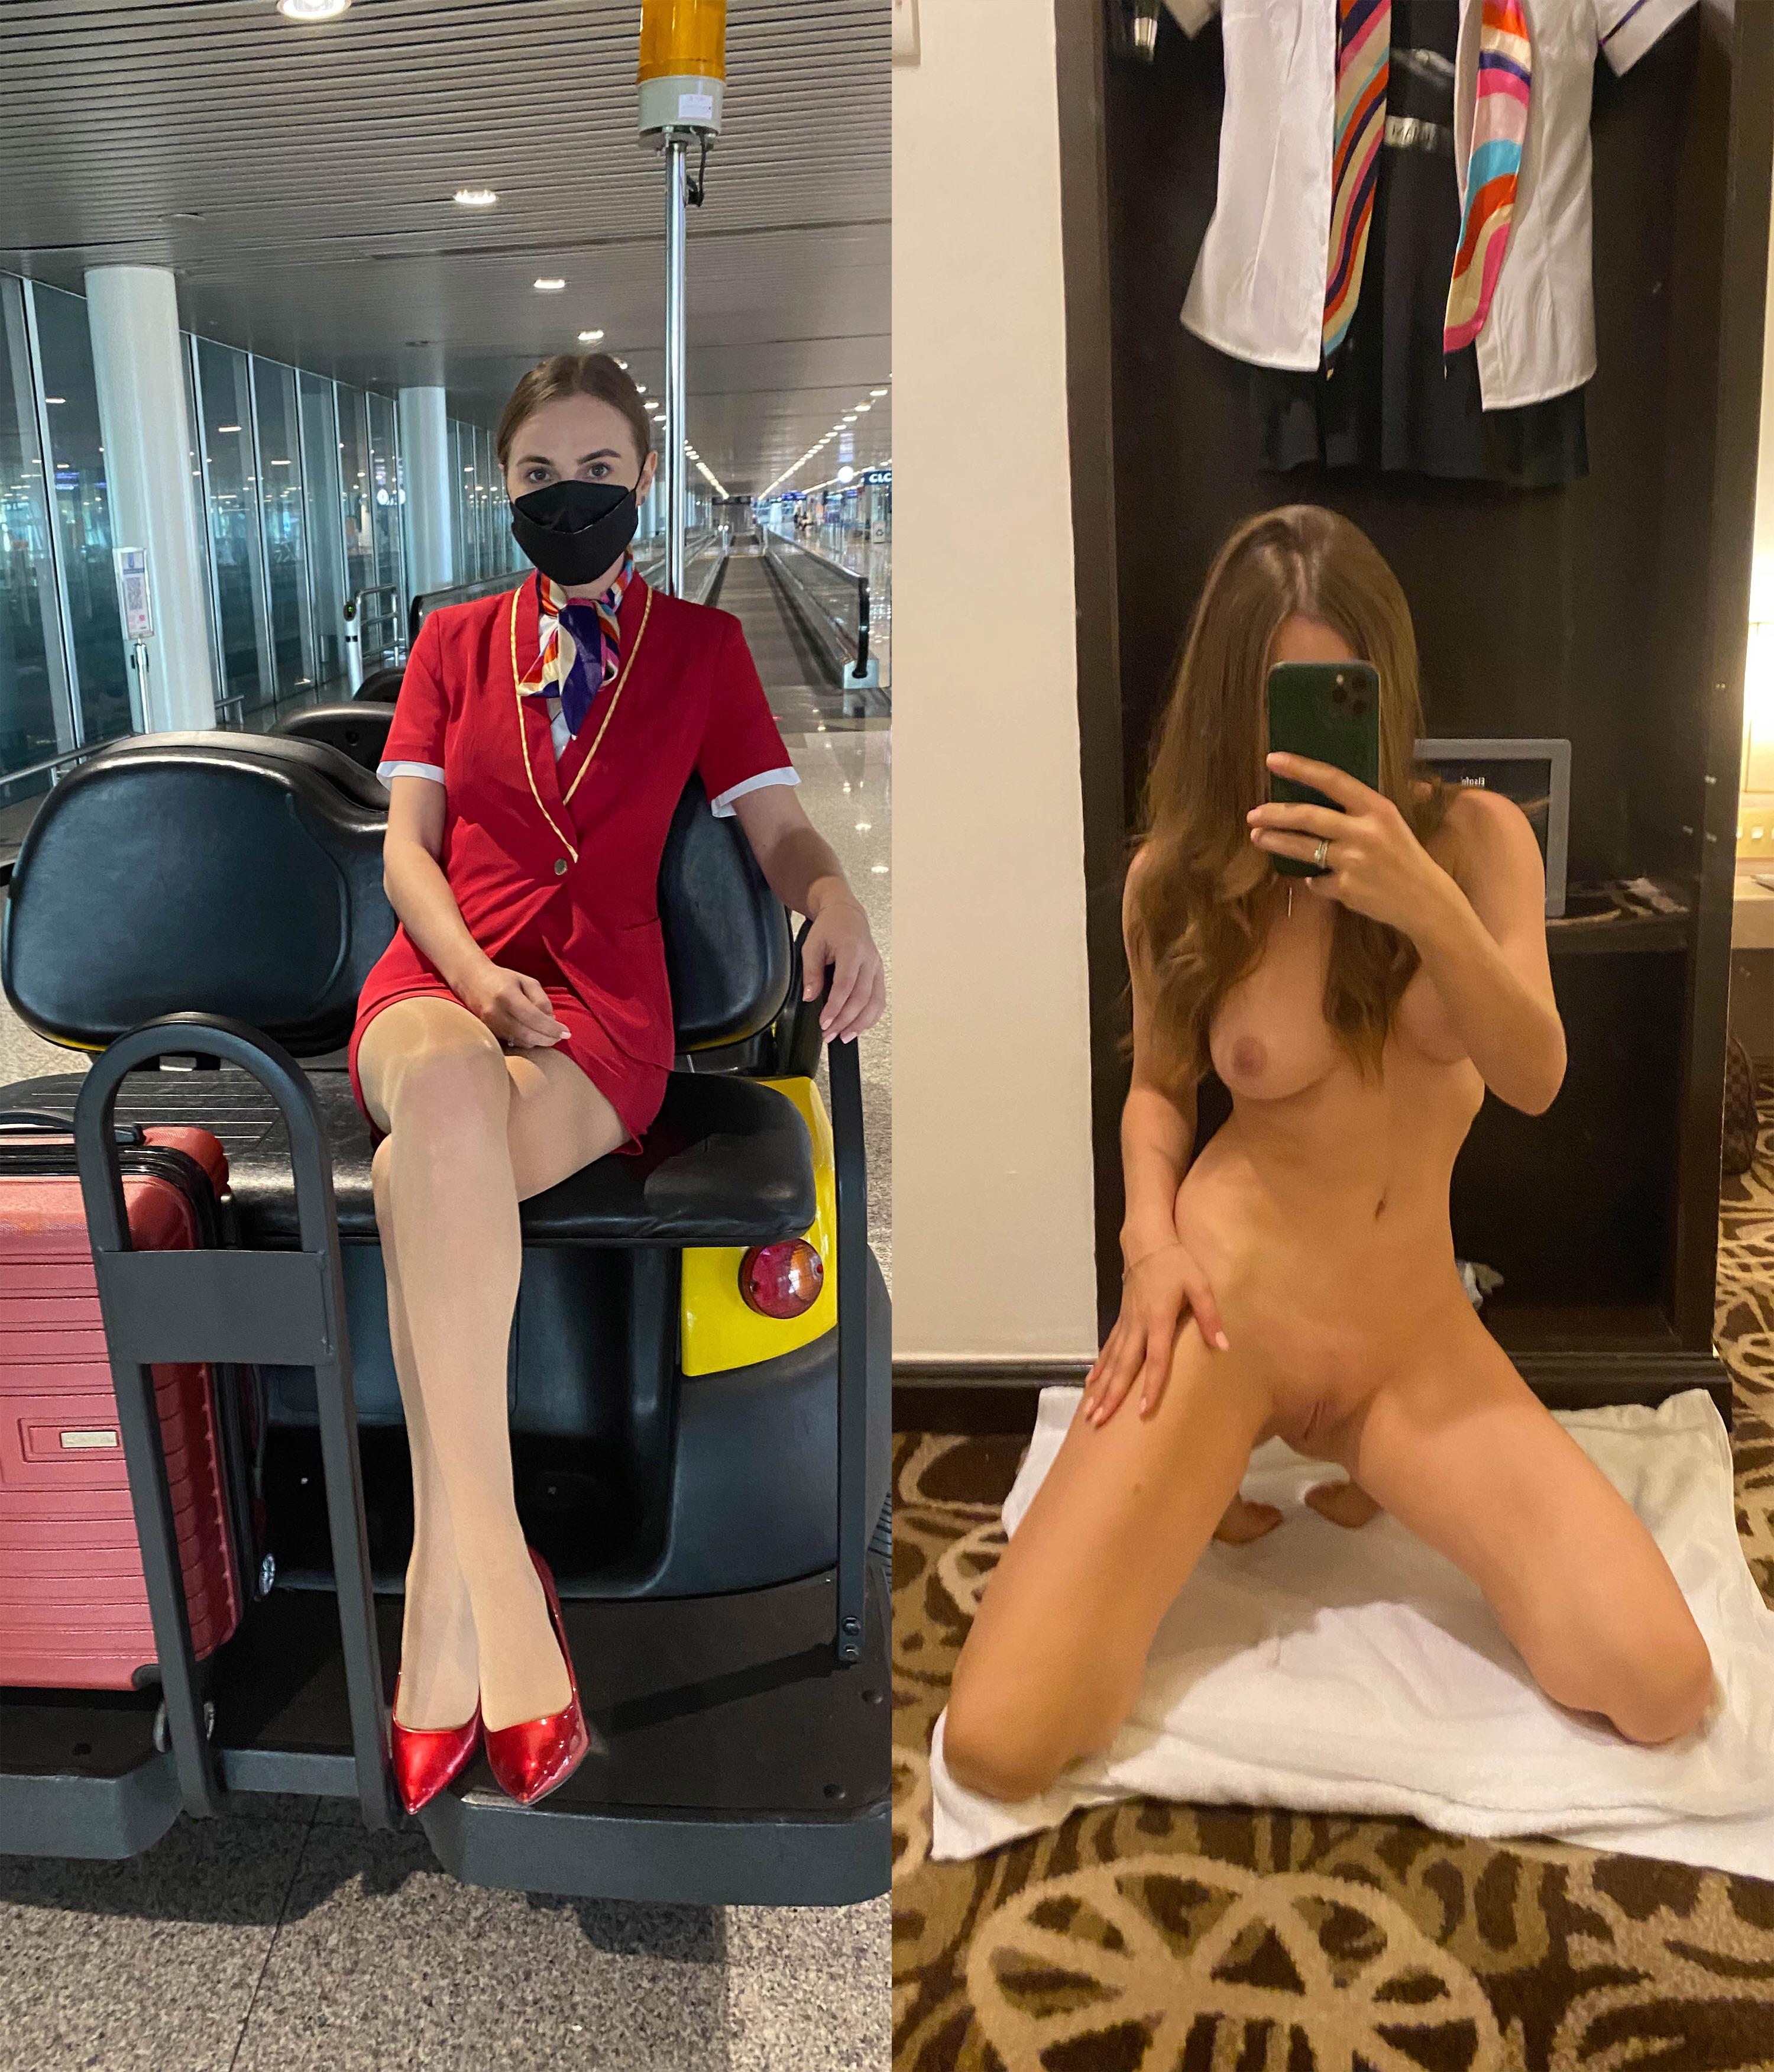 caught up share naked flight attendants photos